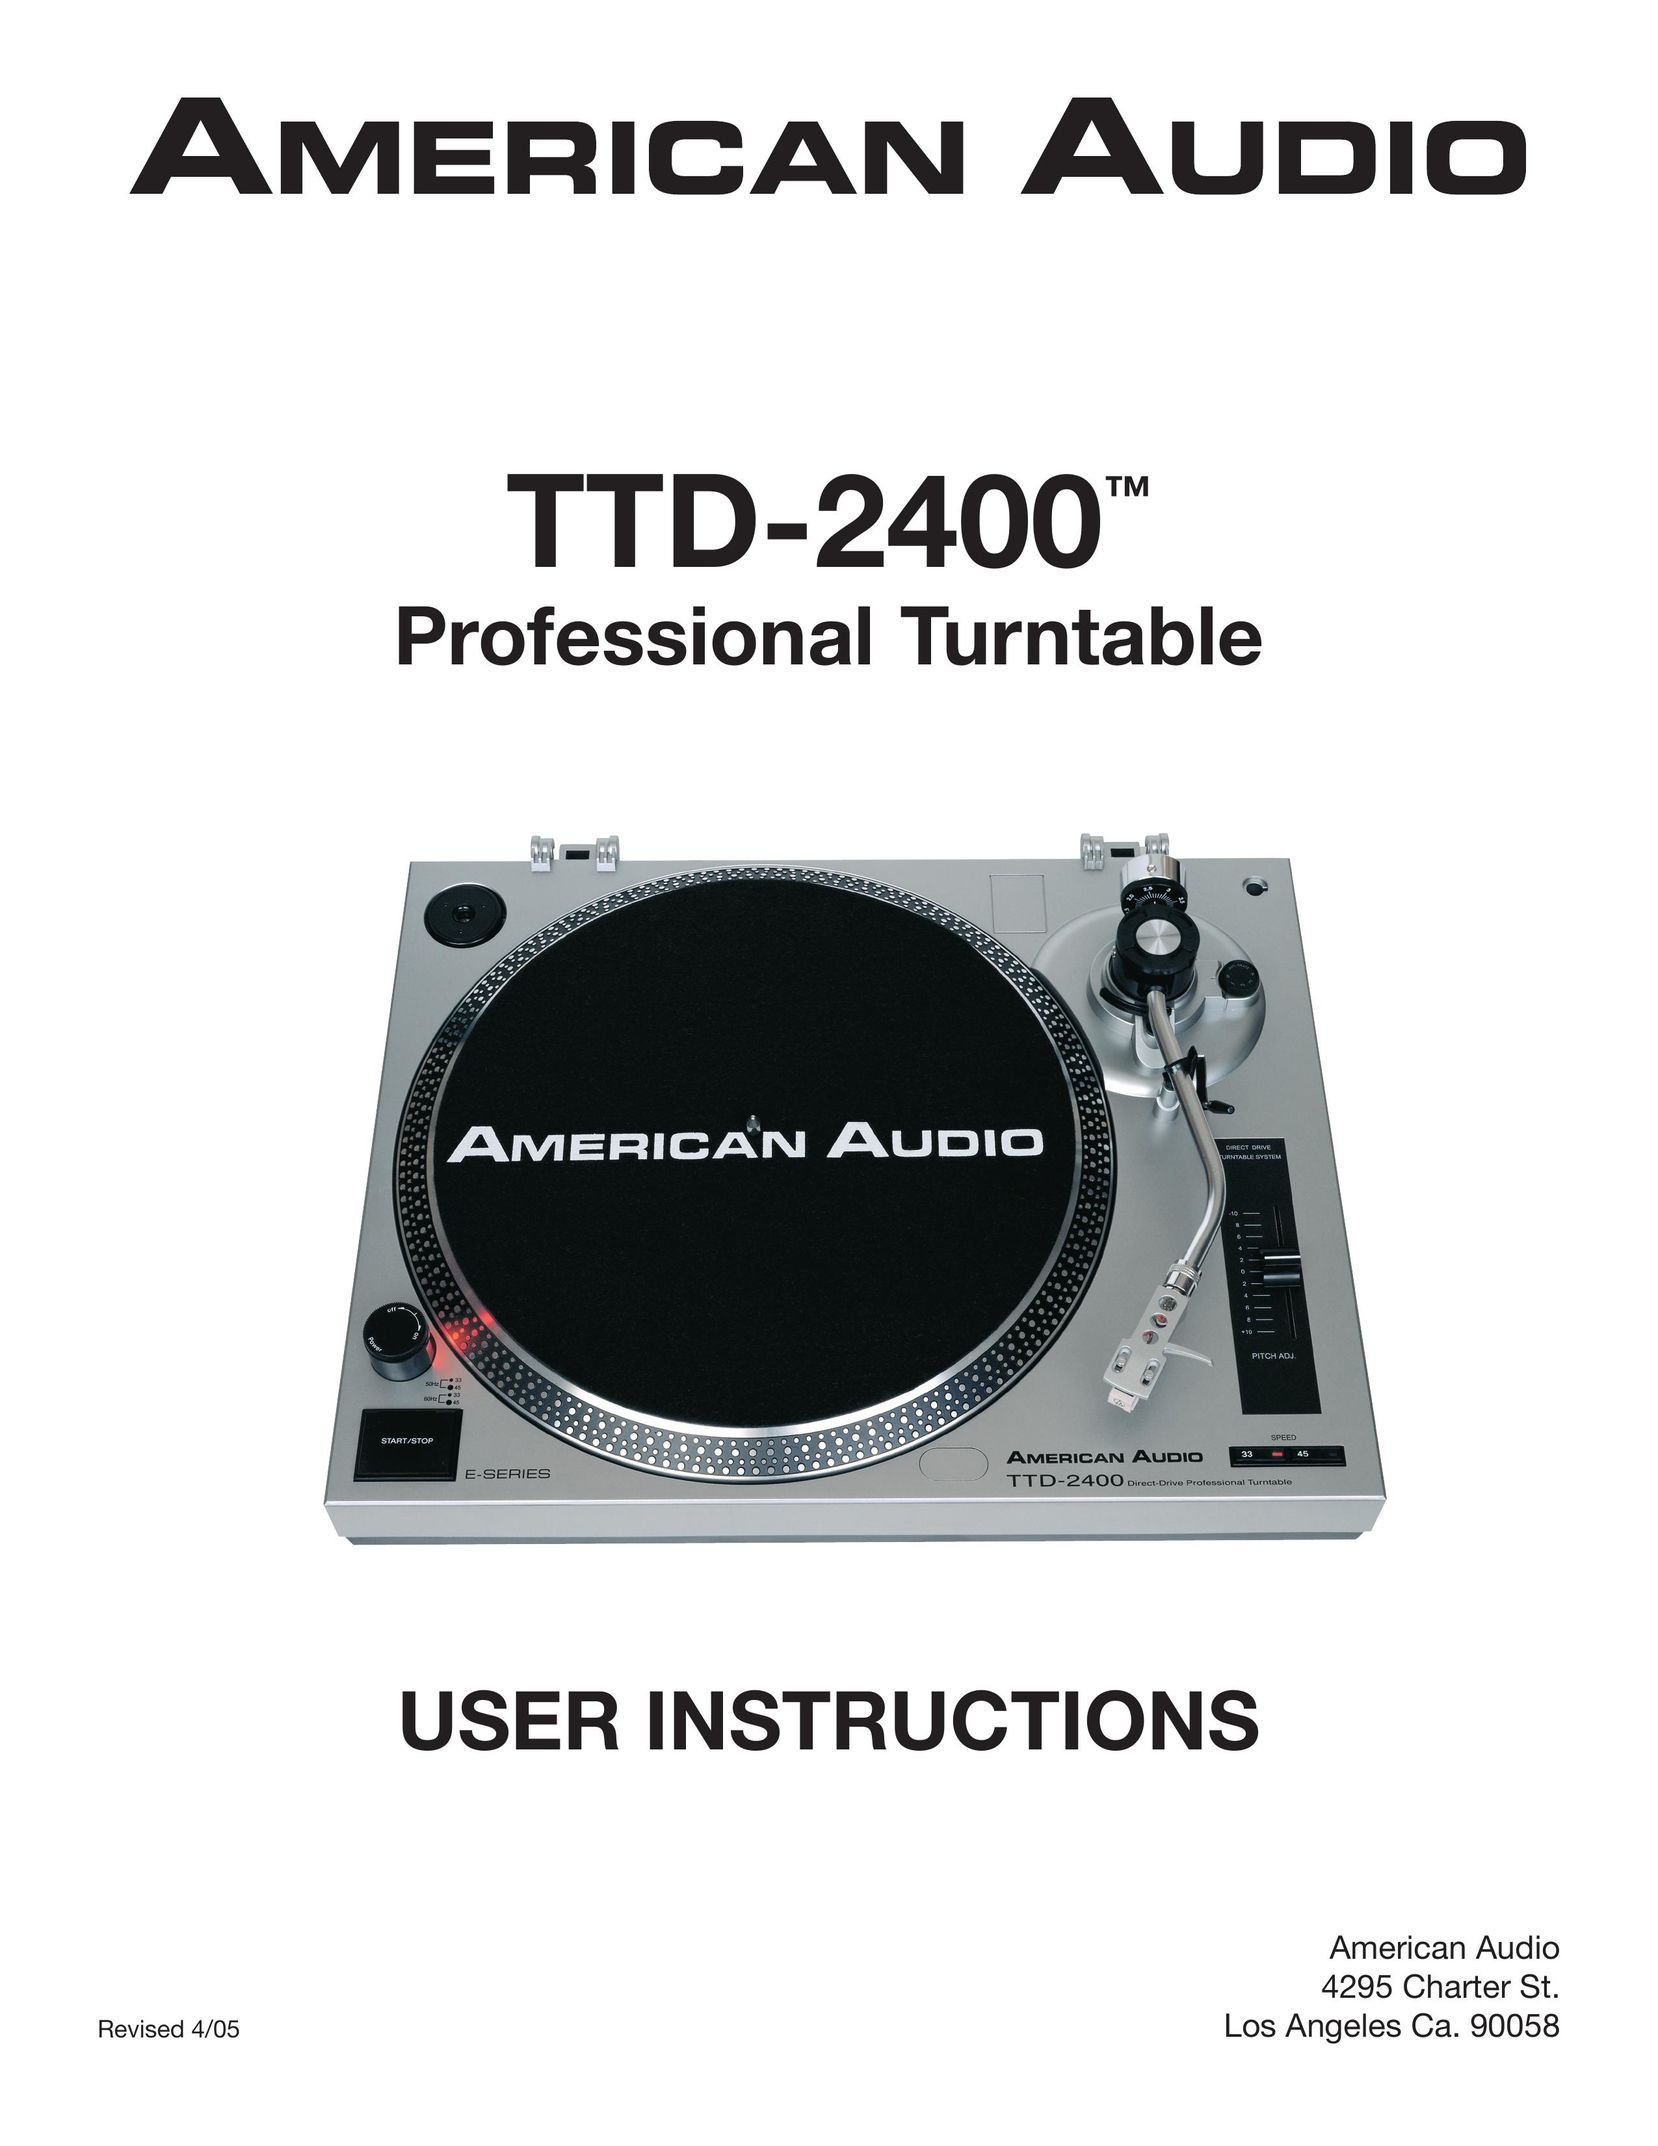 American Audio TTD-2400 Turntable User Manual